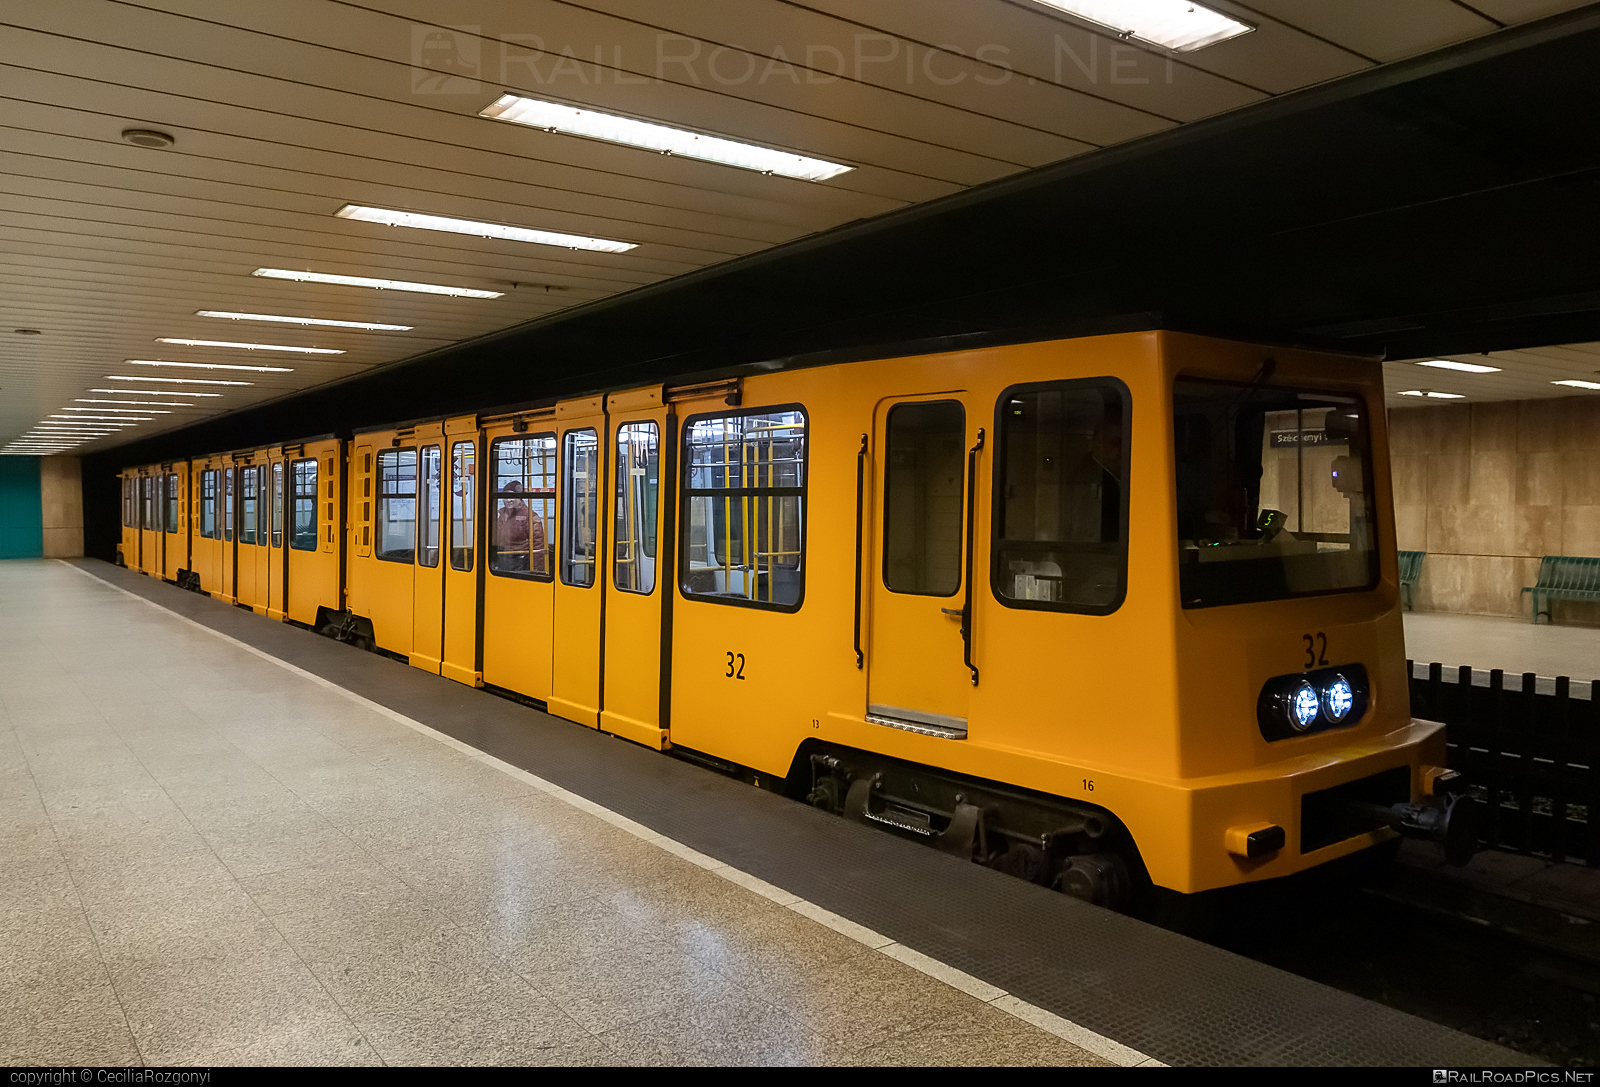 Ganz-MÁVAG MFAV - 32 operated by Budapesti Közlekedési Központ Zrt. (BKK) #budapestiKozlekedesiKozpont #budapestiKozlekedesiKozpontZrt #ganzMavagFav #ganzMavagMfav #ganzmavag #metro #mfav #subway